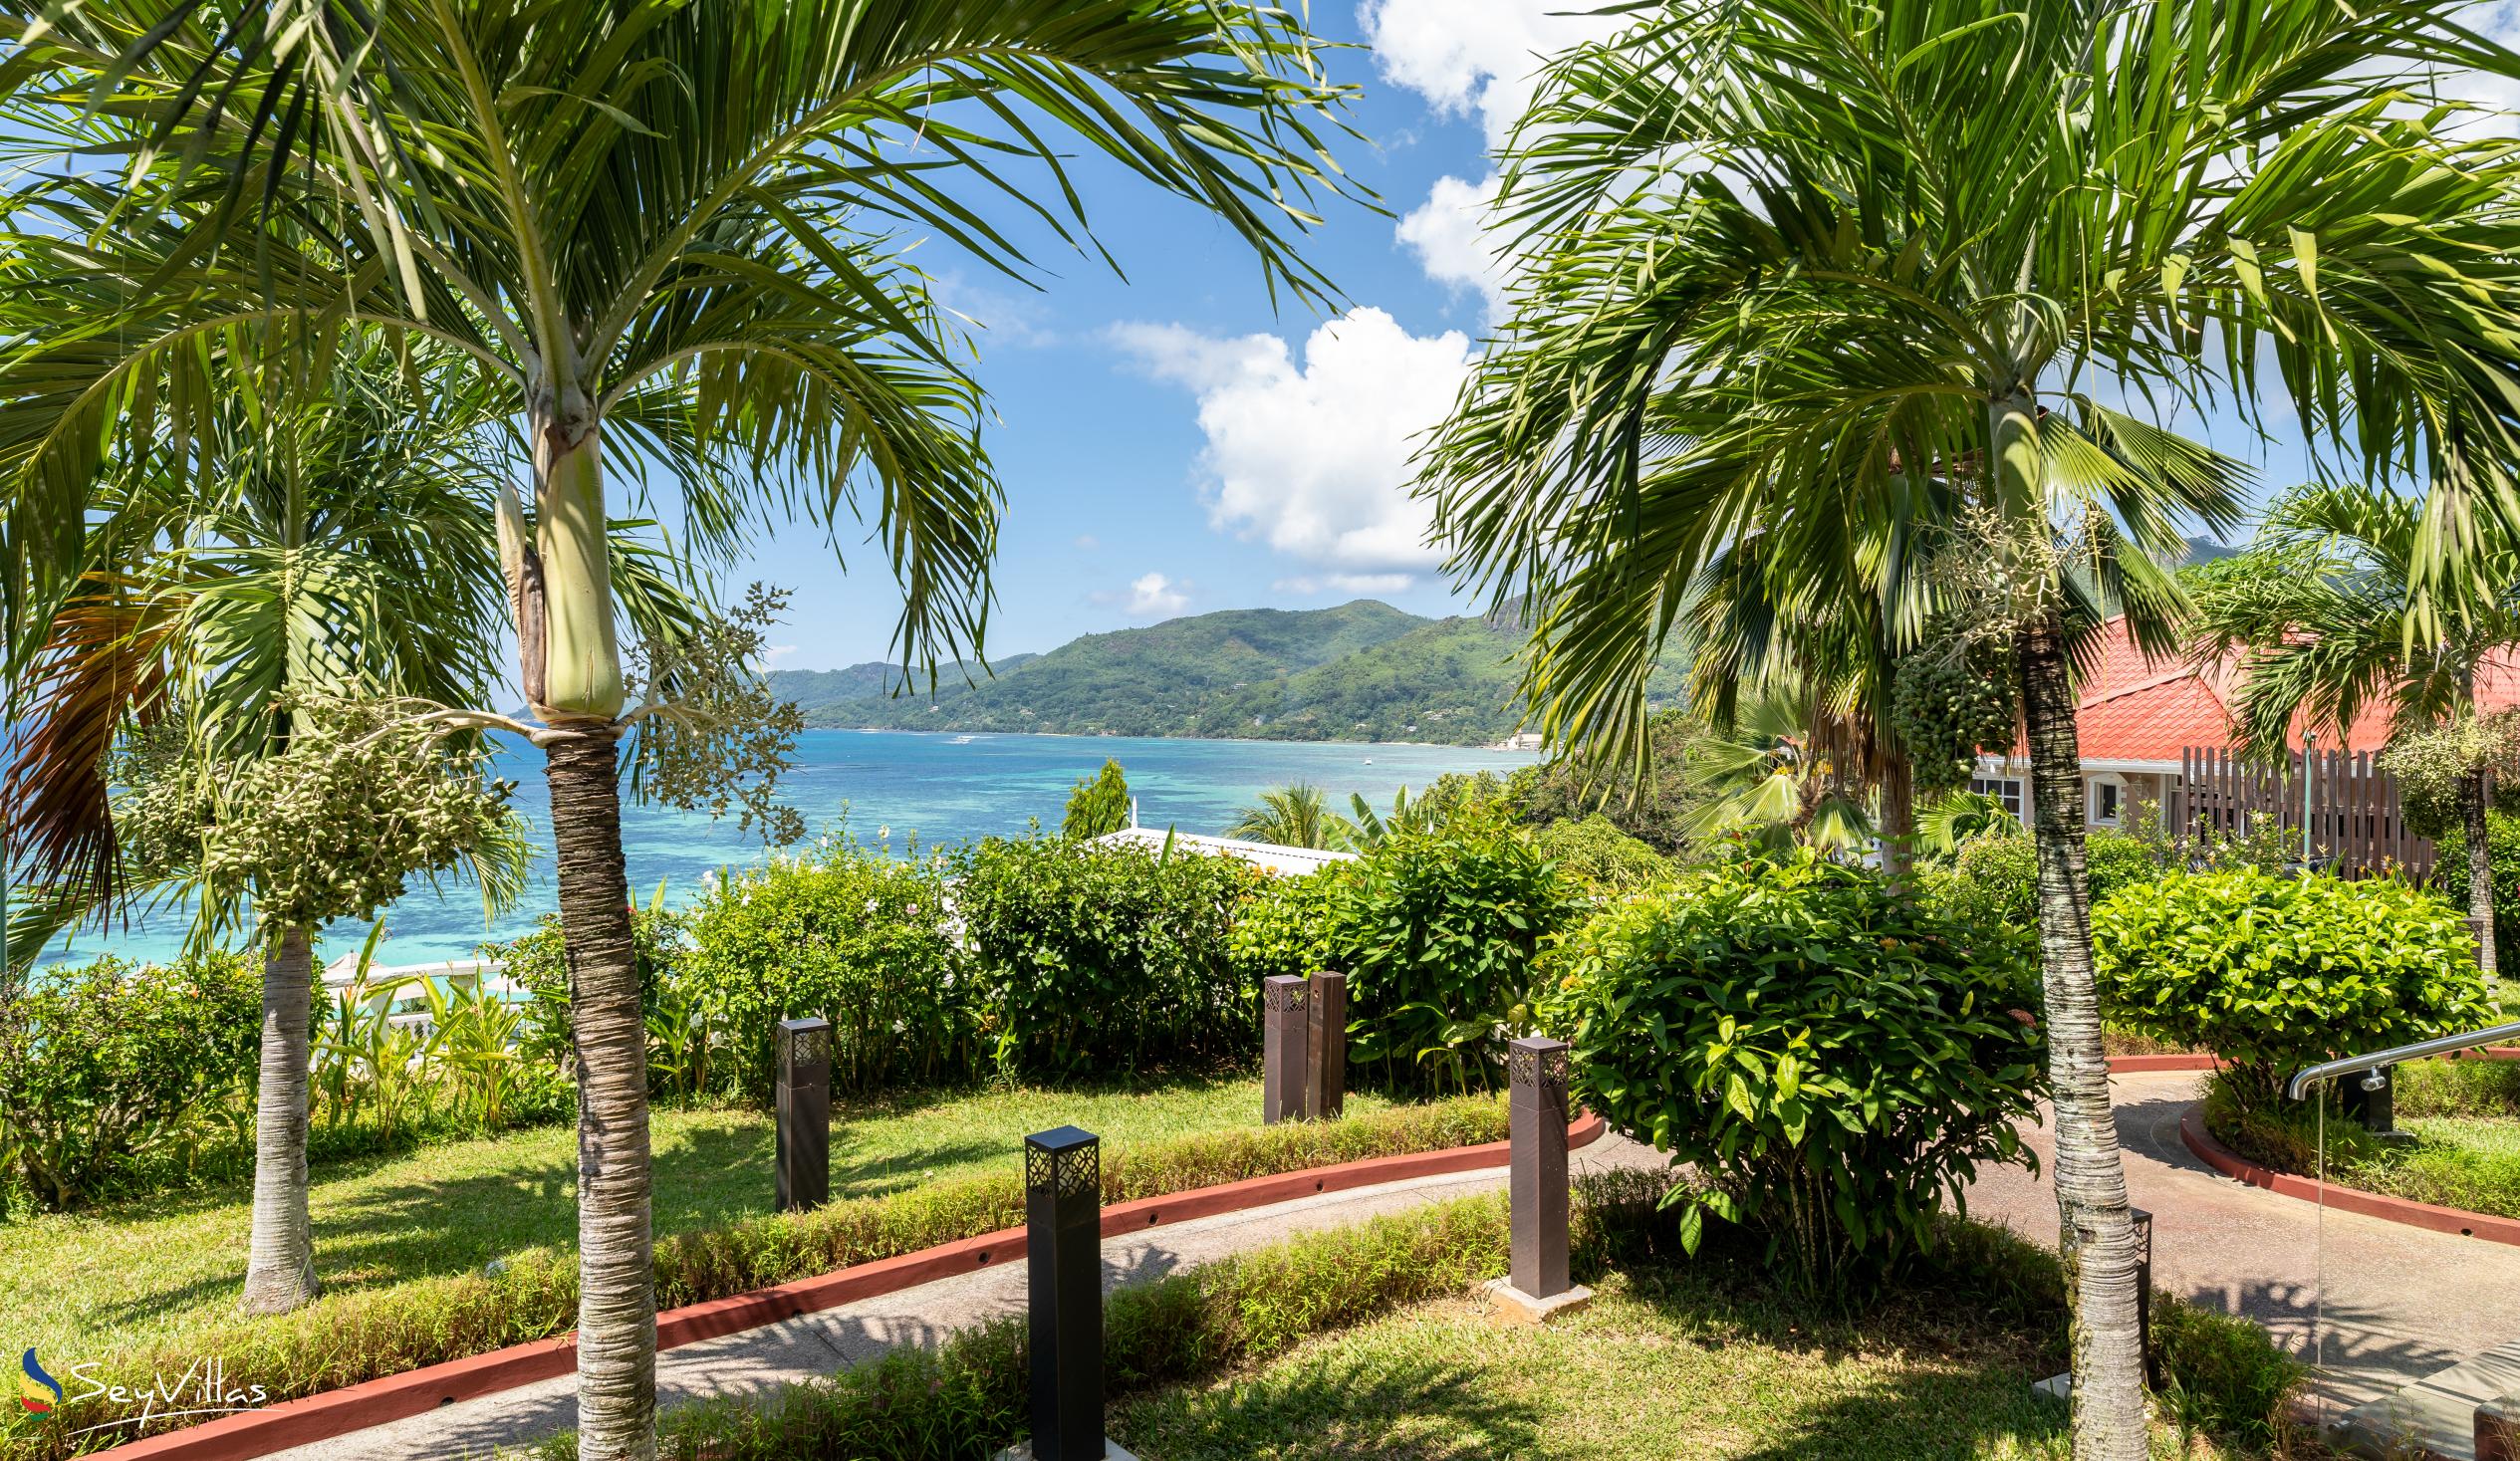 Foto 24: Le Relax Hotel & Restaurant - Aussenbereich - Mahé (Seychellen)